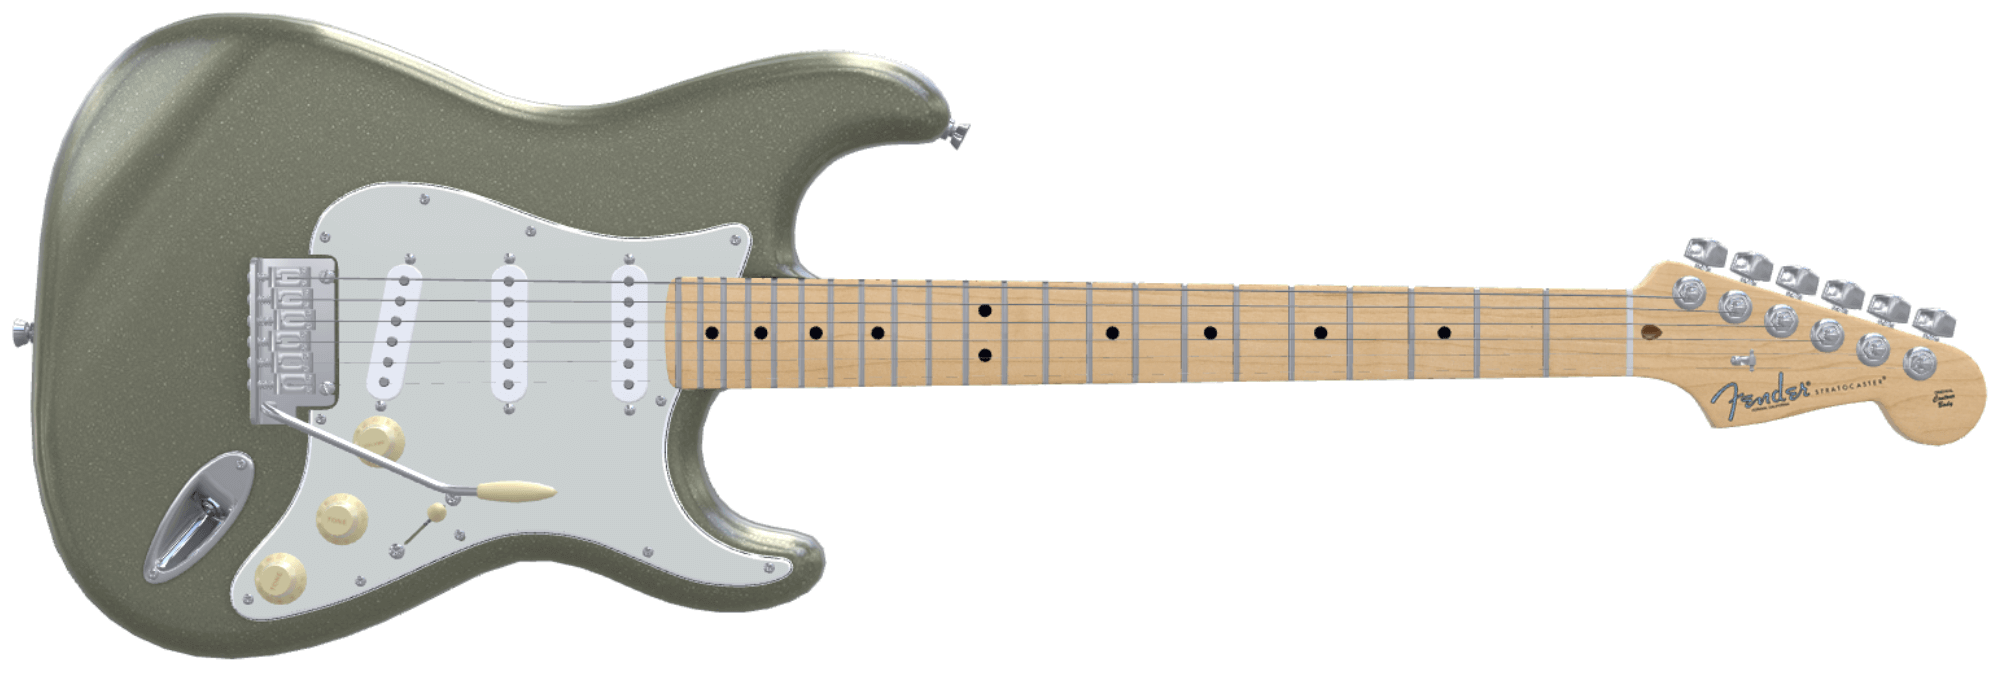 Fender strat with maple fretboard